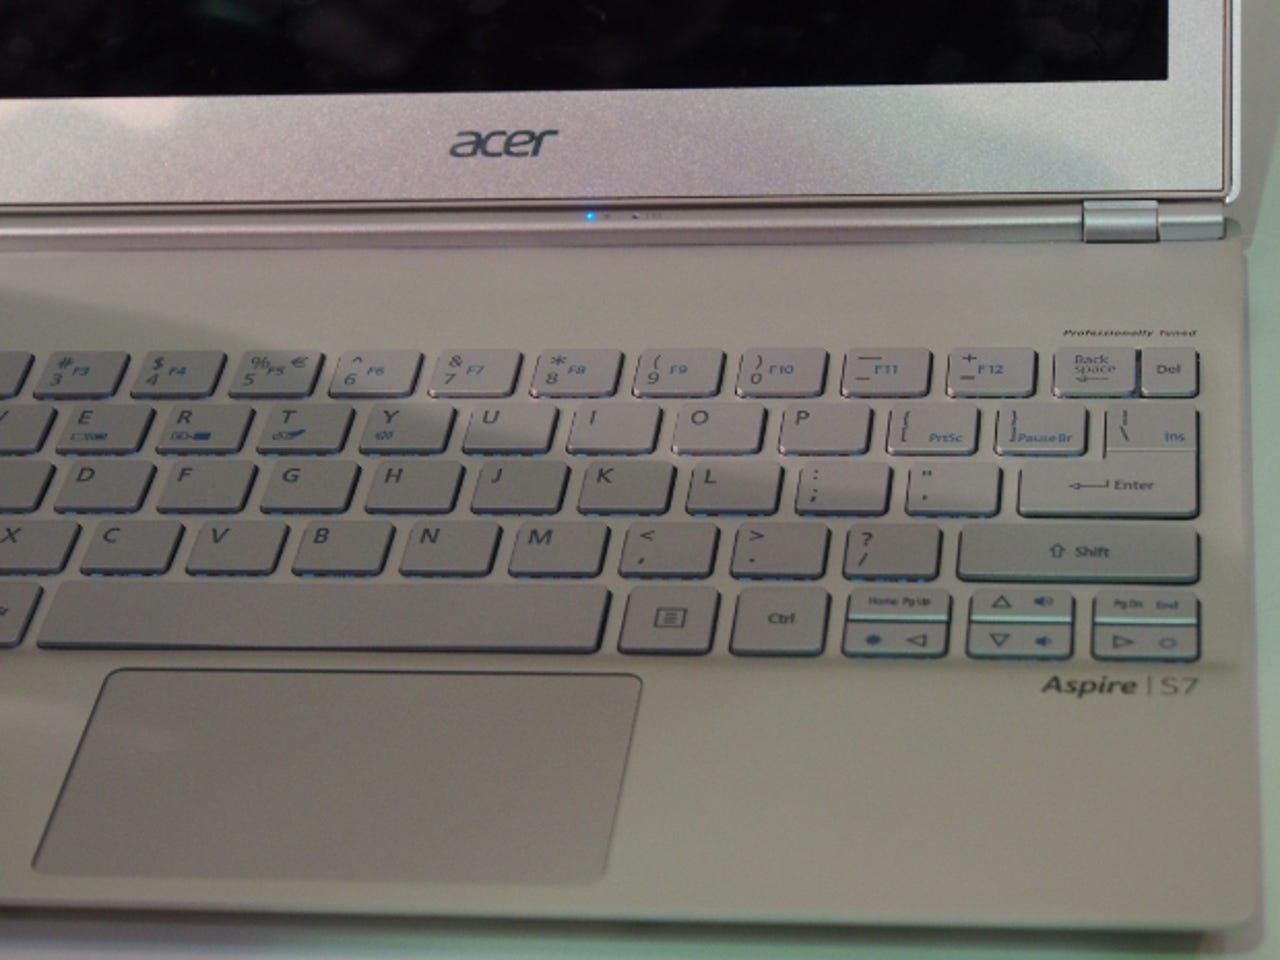 acer-s7-keyboard-jpg.jpg